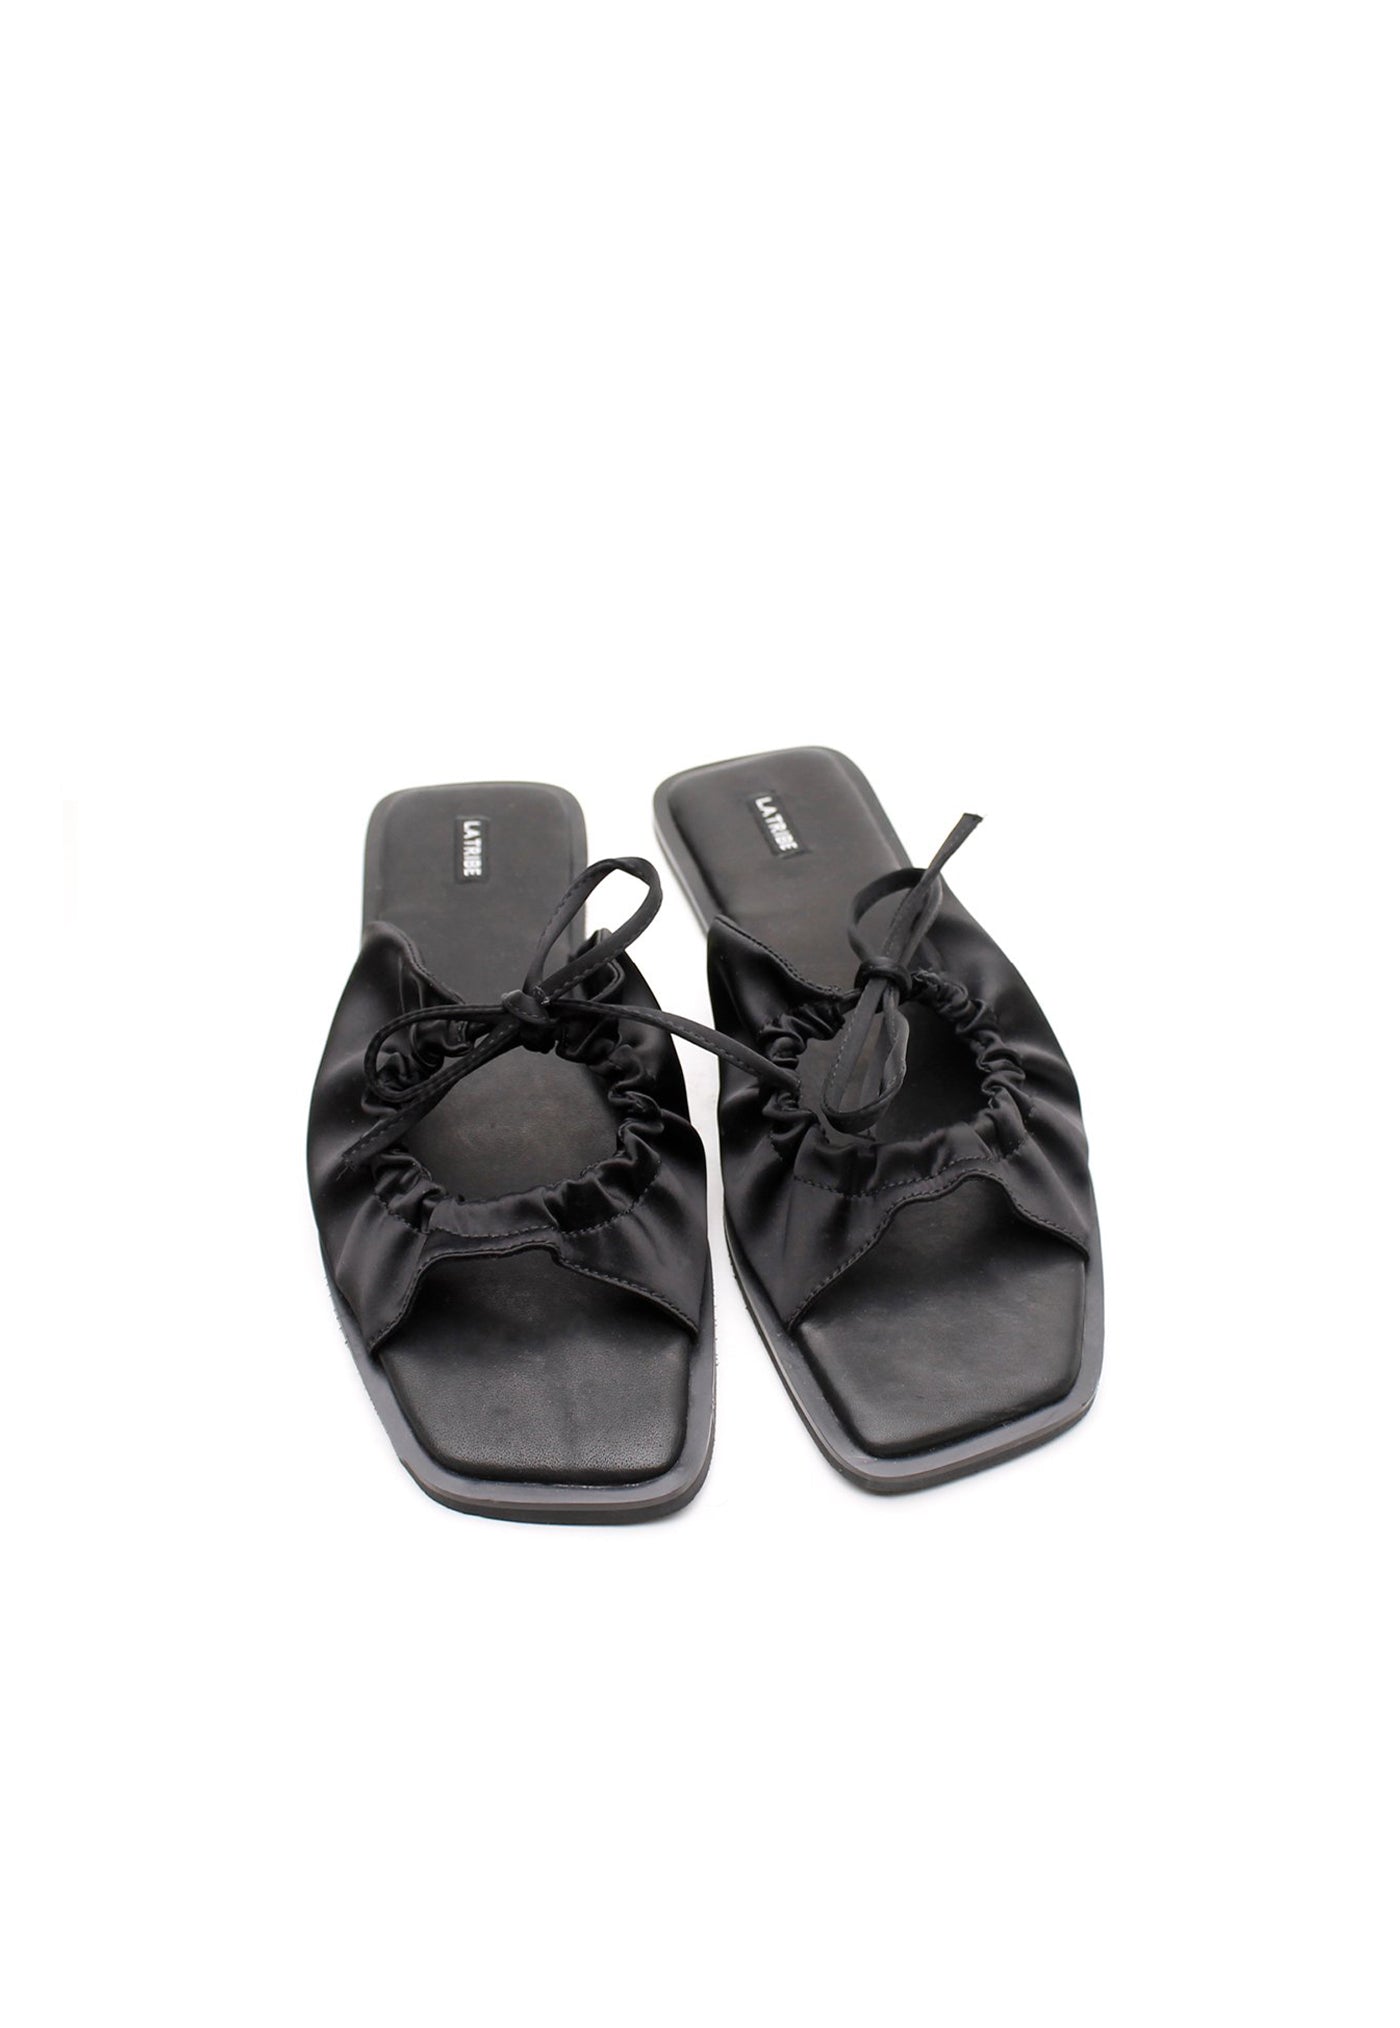 Satin Tie Sandal - Black sold by Angel Divine